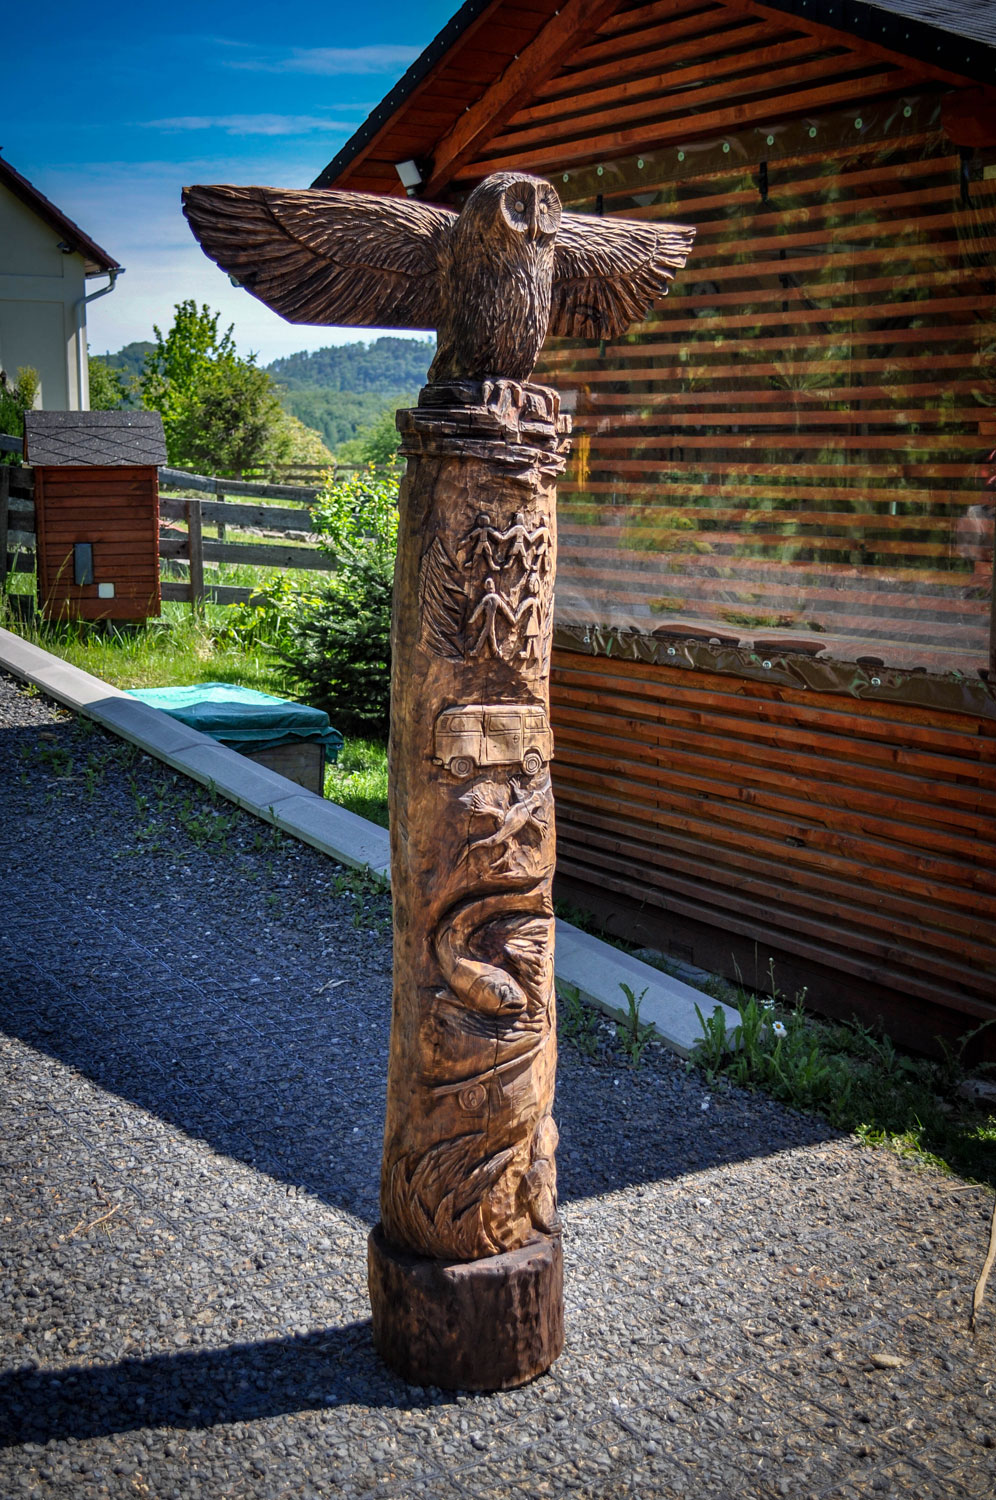 drevorezba-totem-vyrezavani-carving-wood-drevo-socha-radekzdrazil-20200522-02